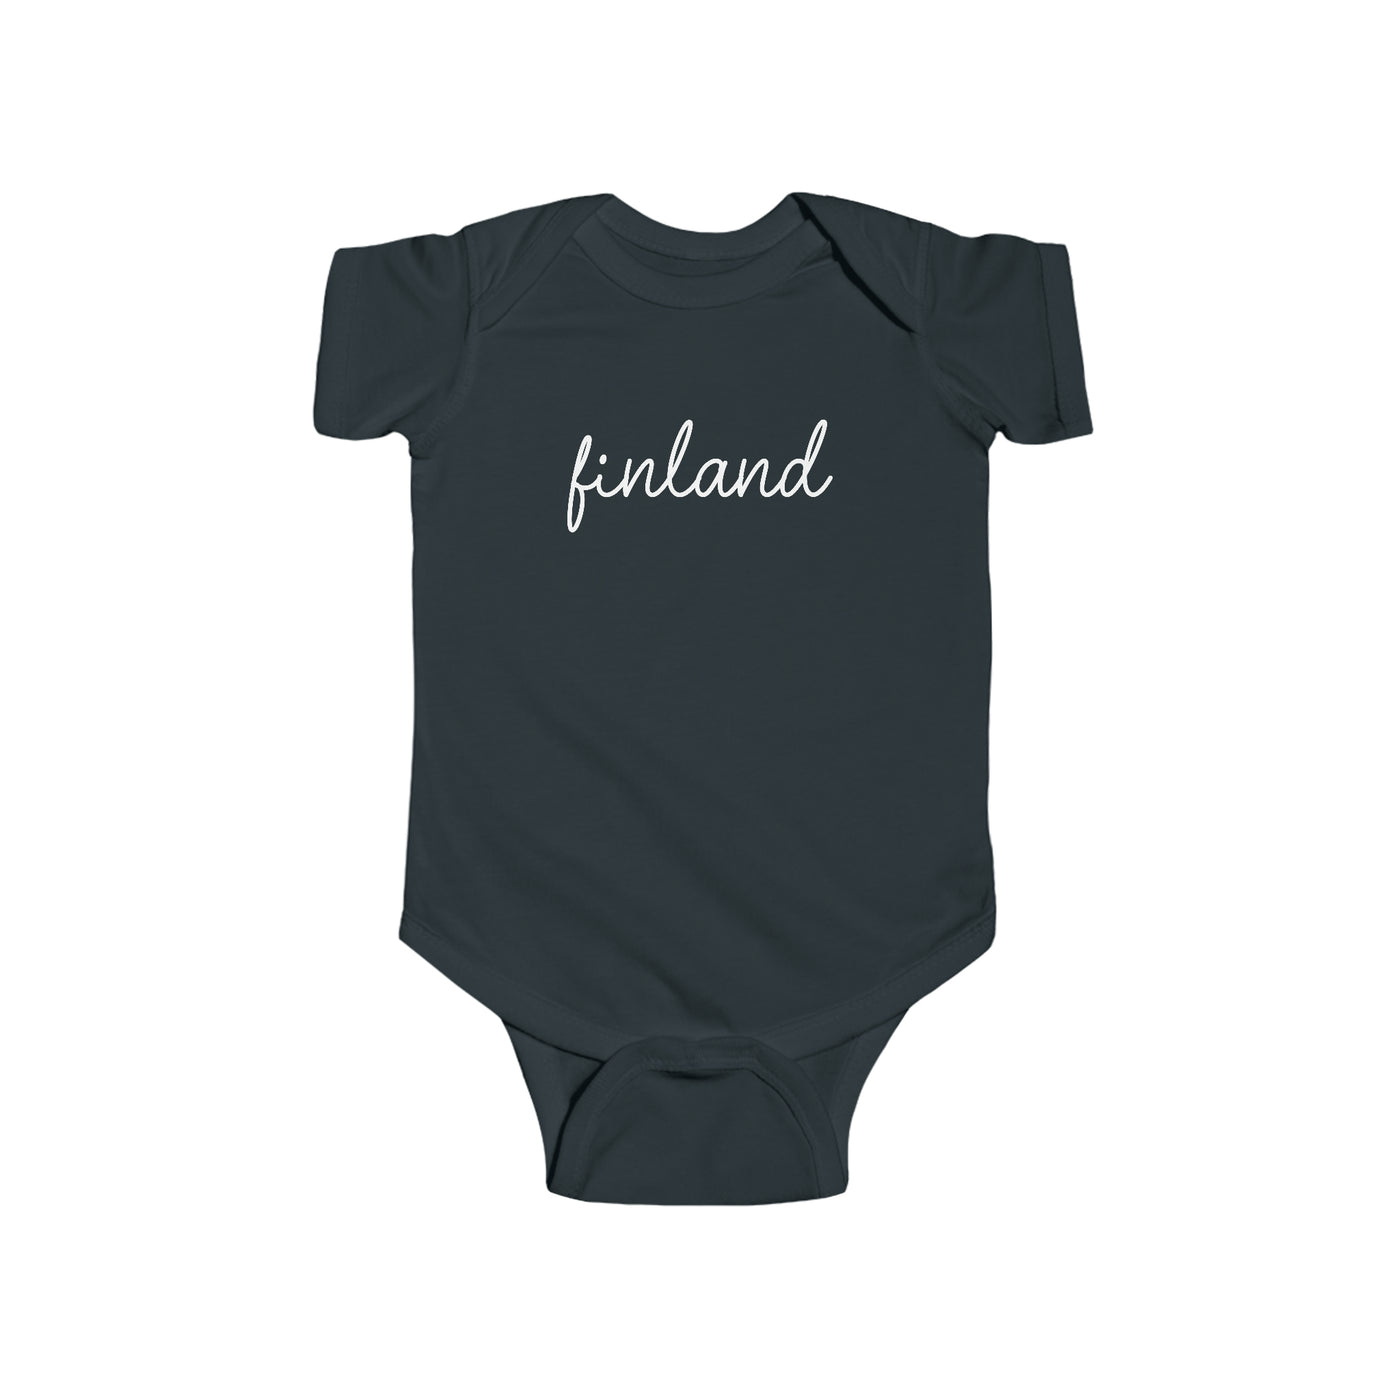 Finland Baby Bodysuit